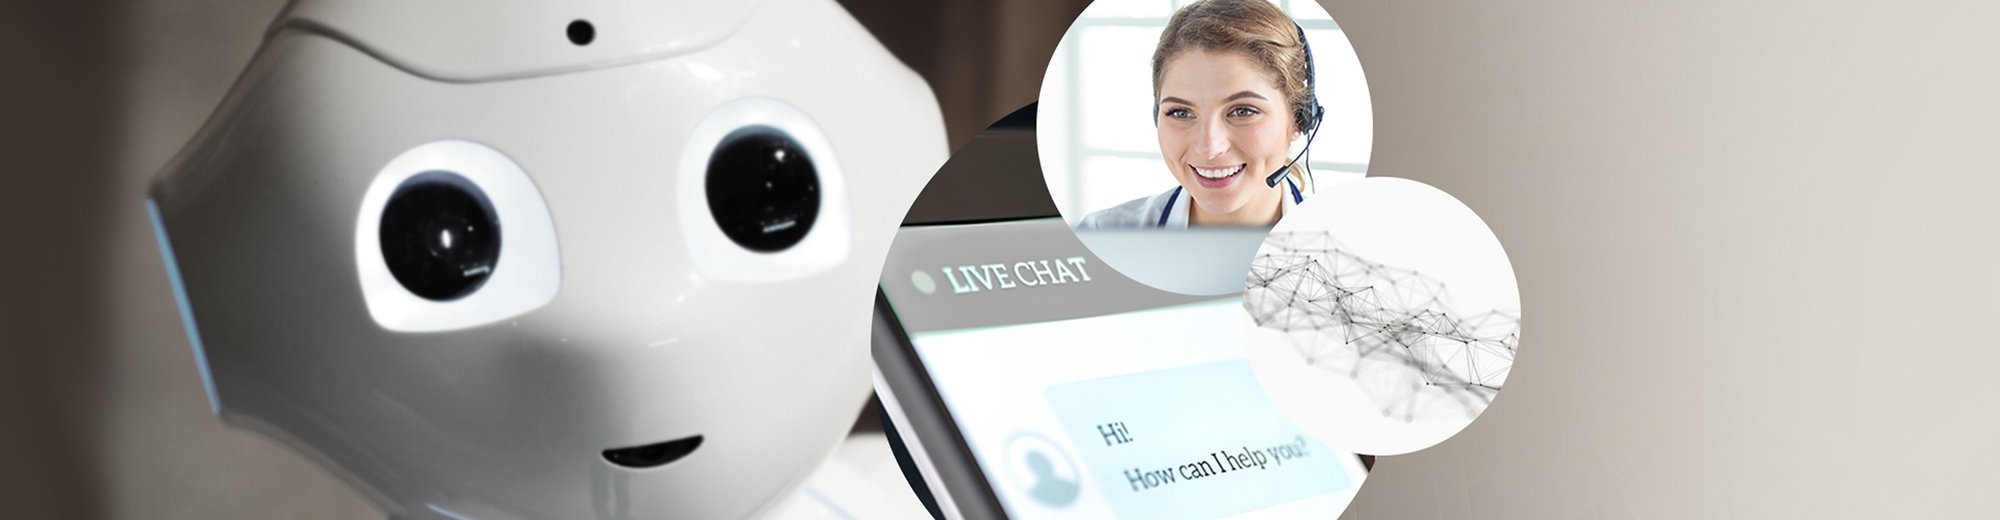 Herobanner-Chatbots-Conversational-AI-3840x1000